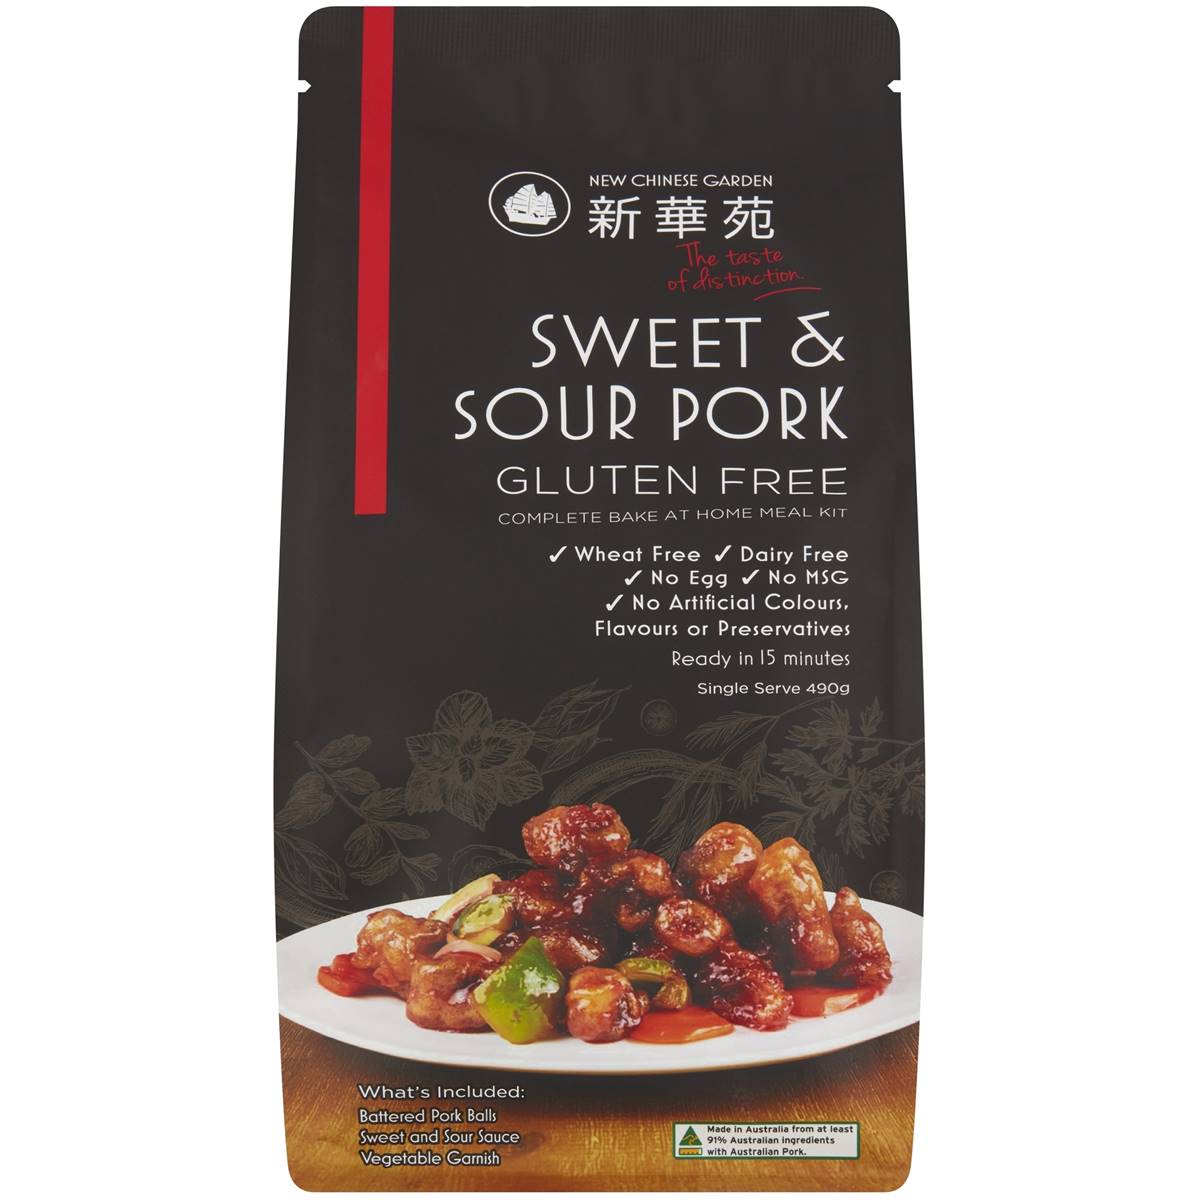 New Chinese Garden Sweet & Sour Pork 490g